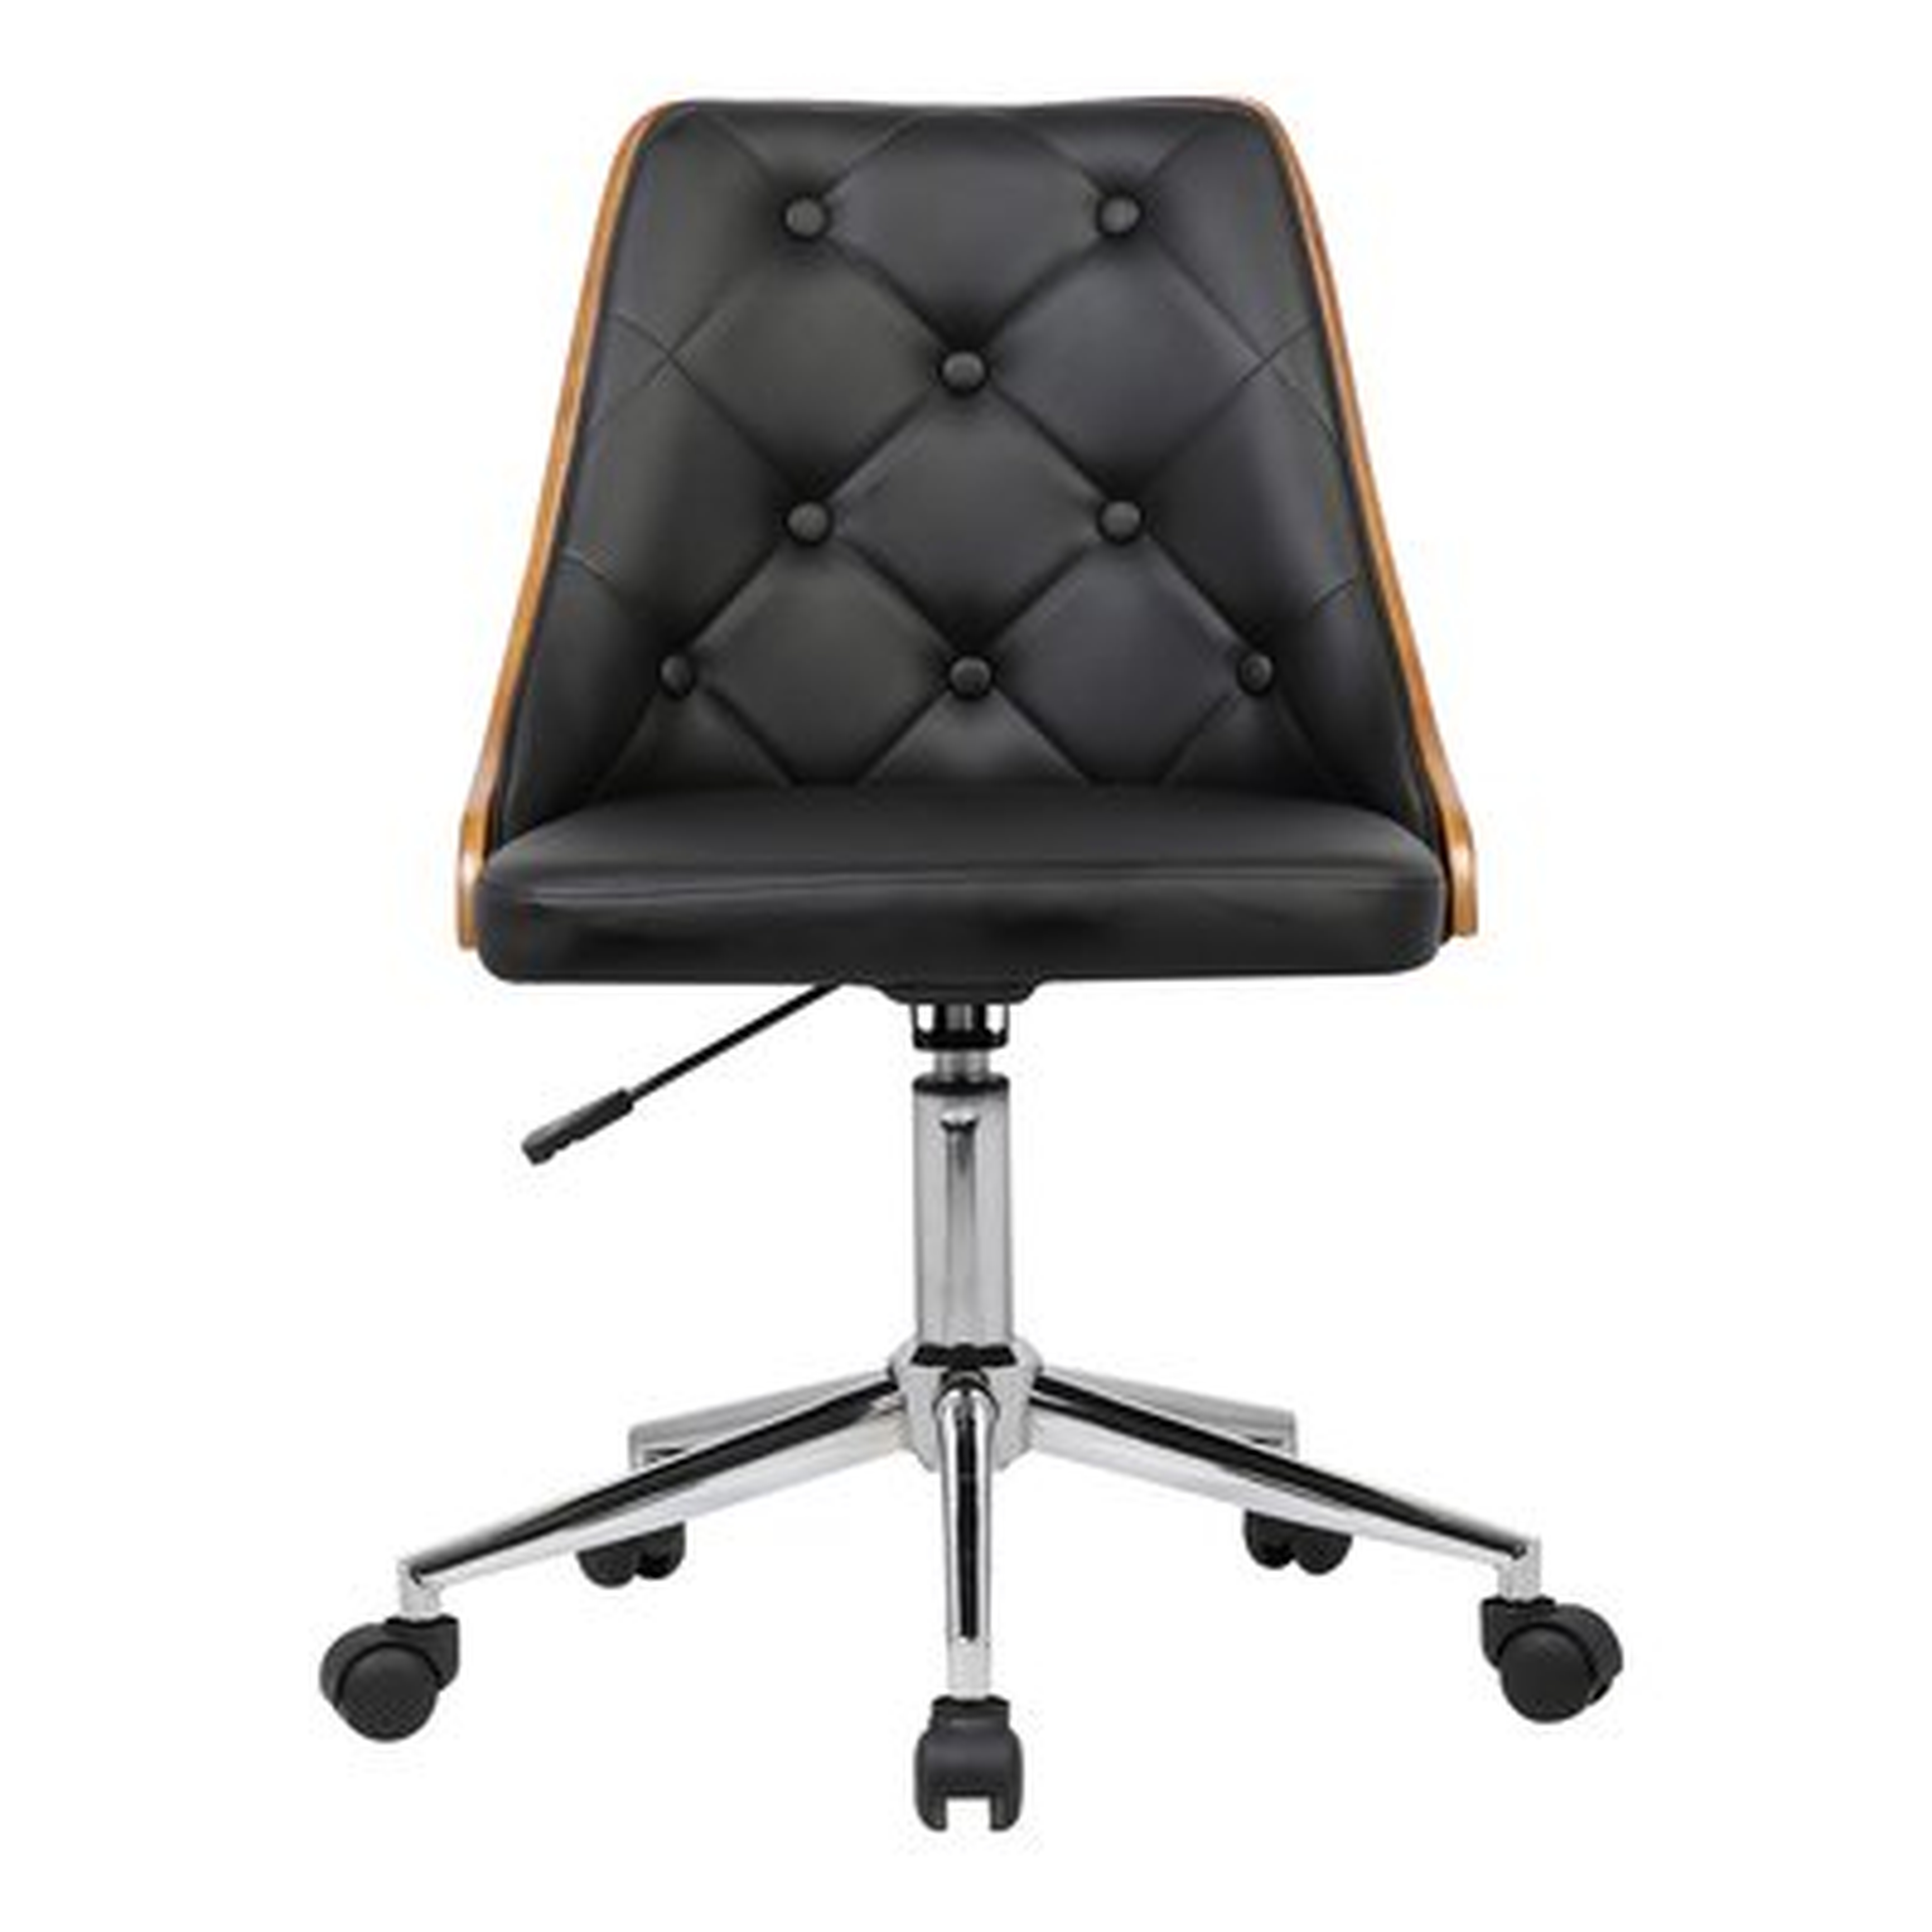 Easthampton Mid-Century Desk Chair - Wayfair